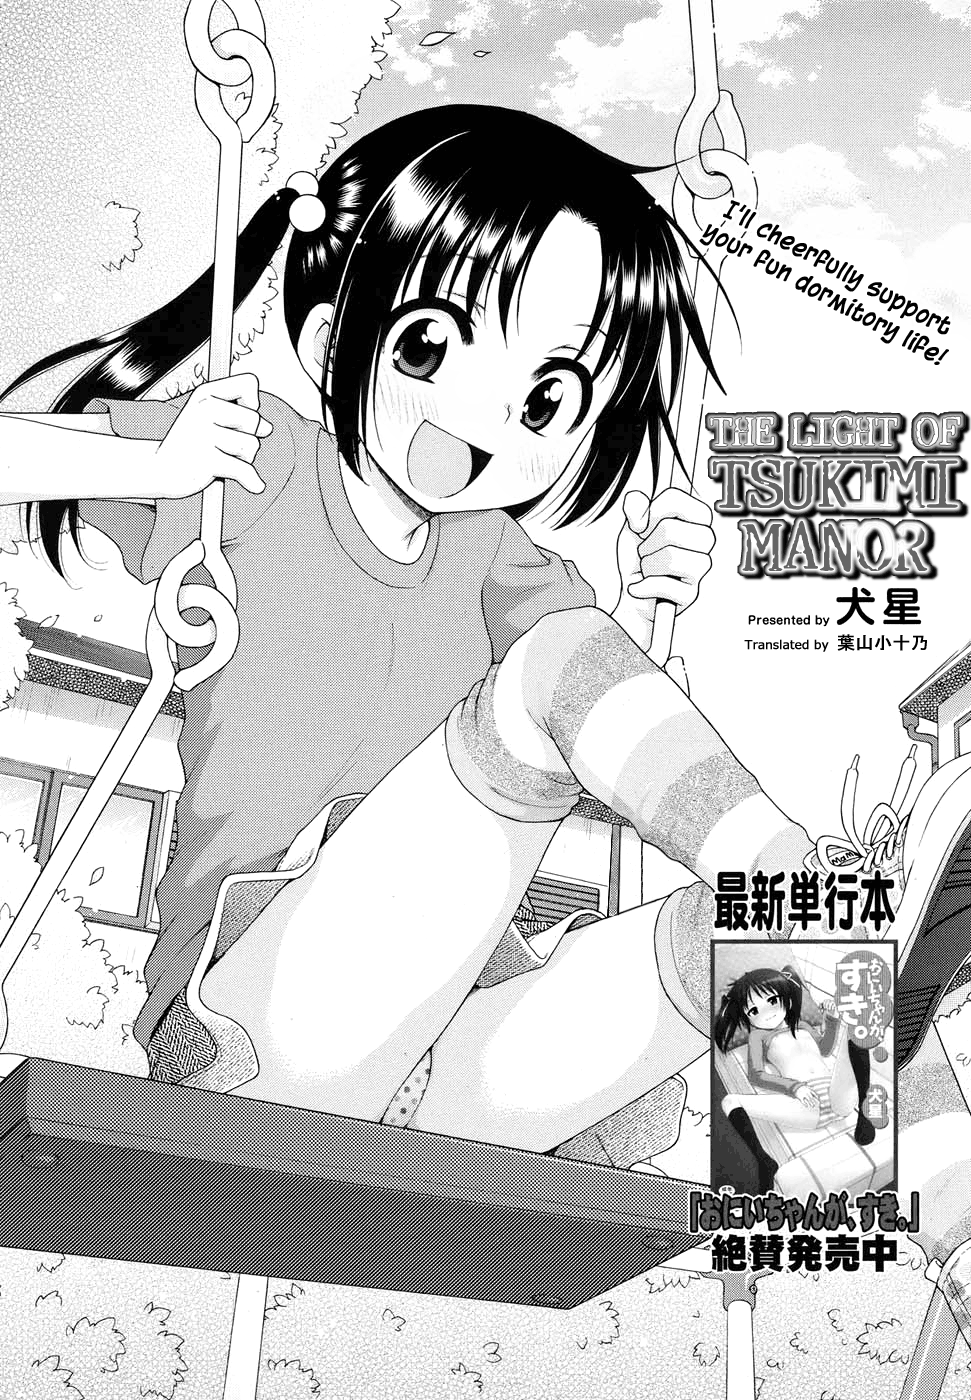 The Light of Tsukimi Manor 1-6 hentai manga picture 2